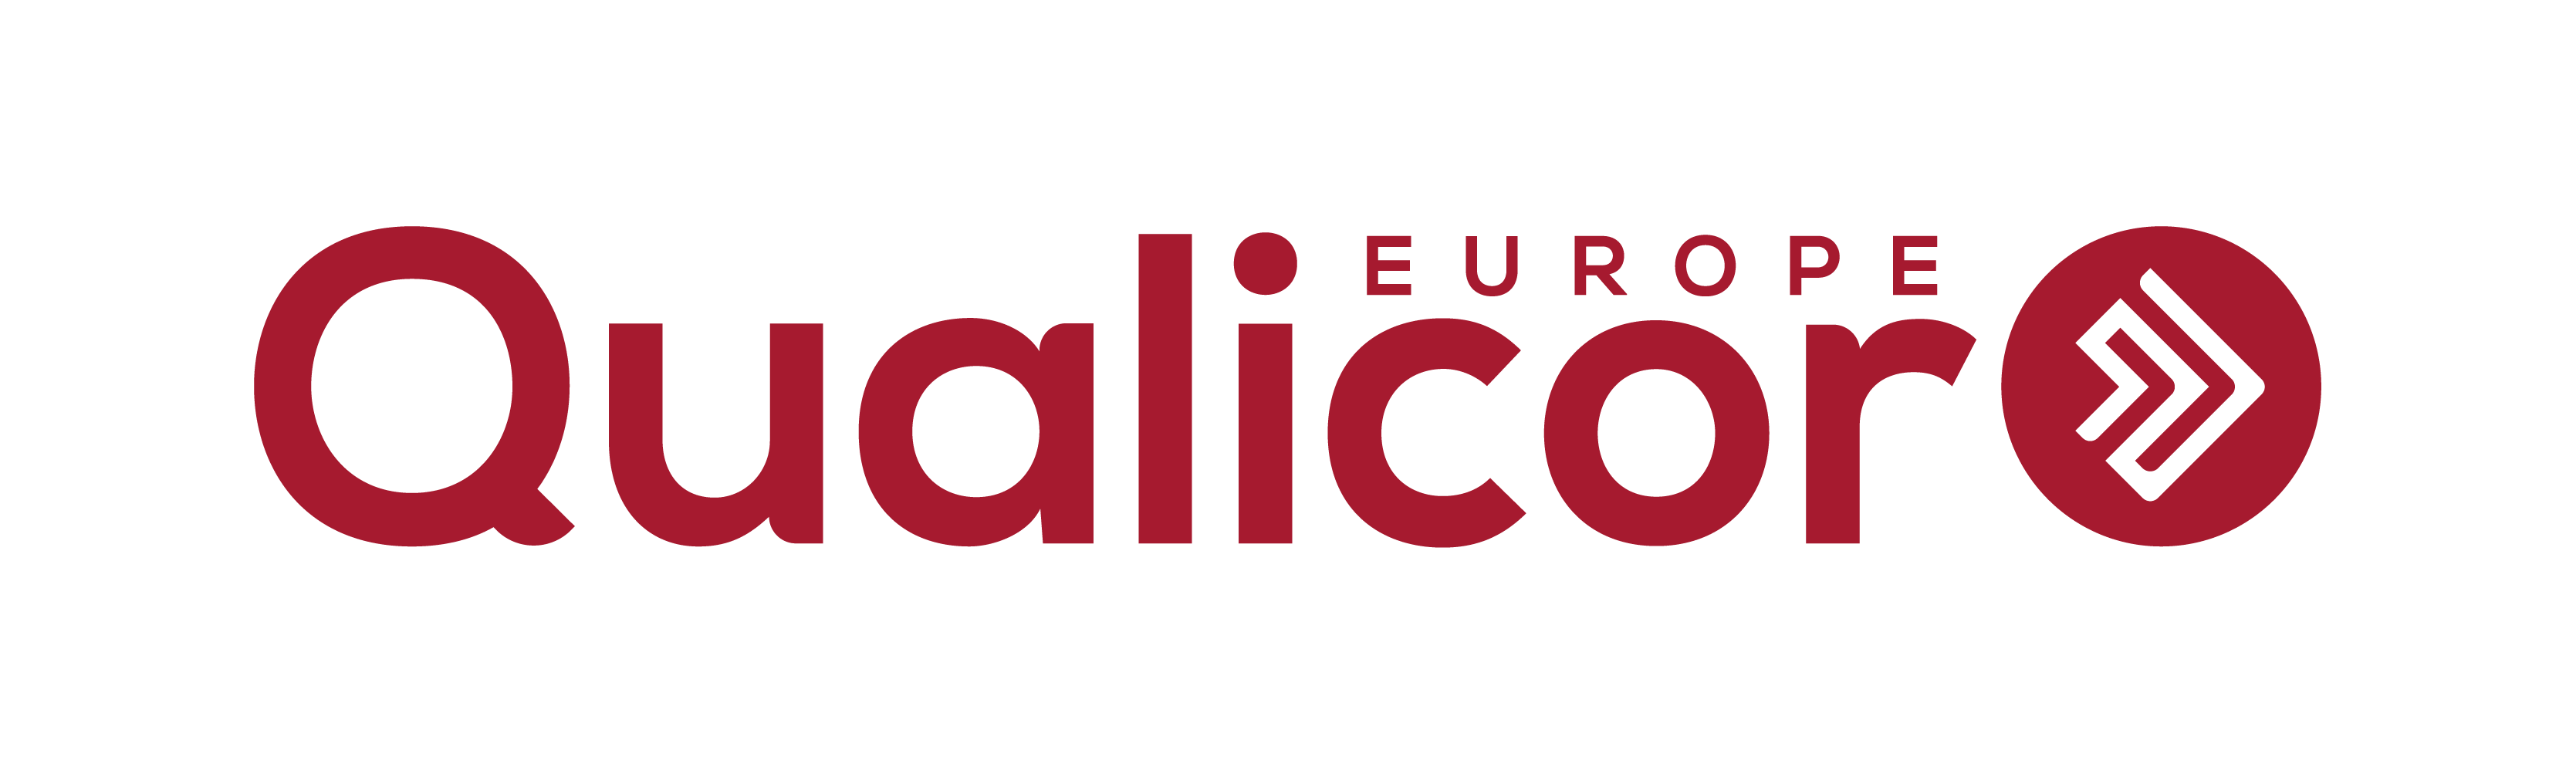 Qualicor Europe